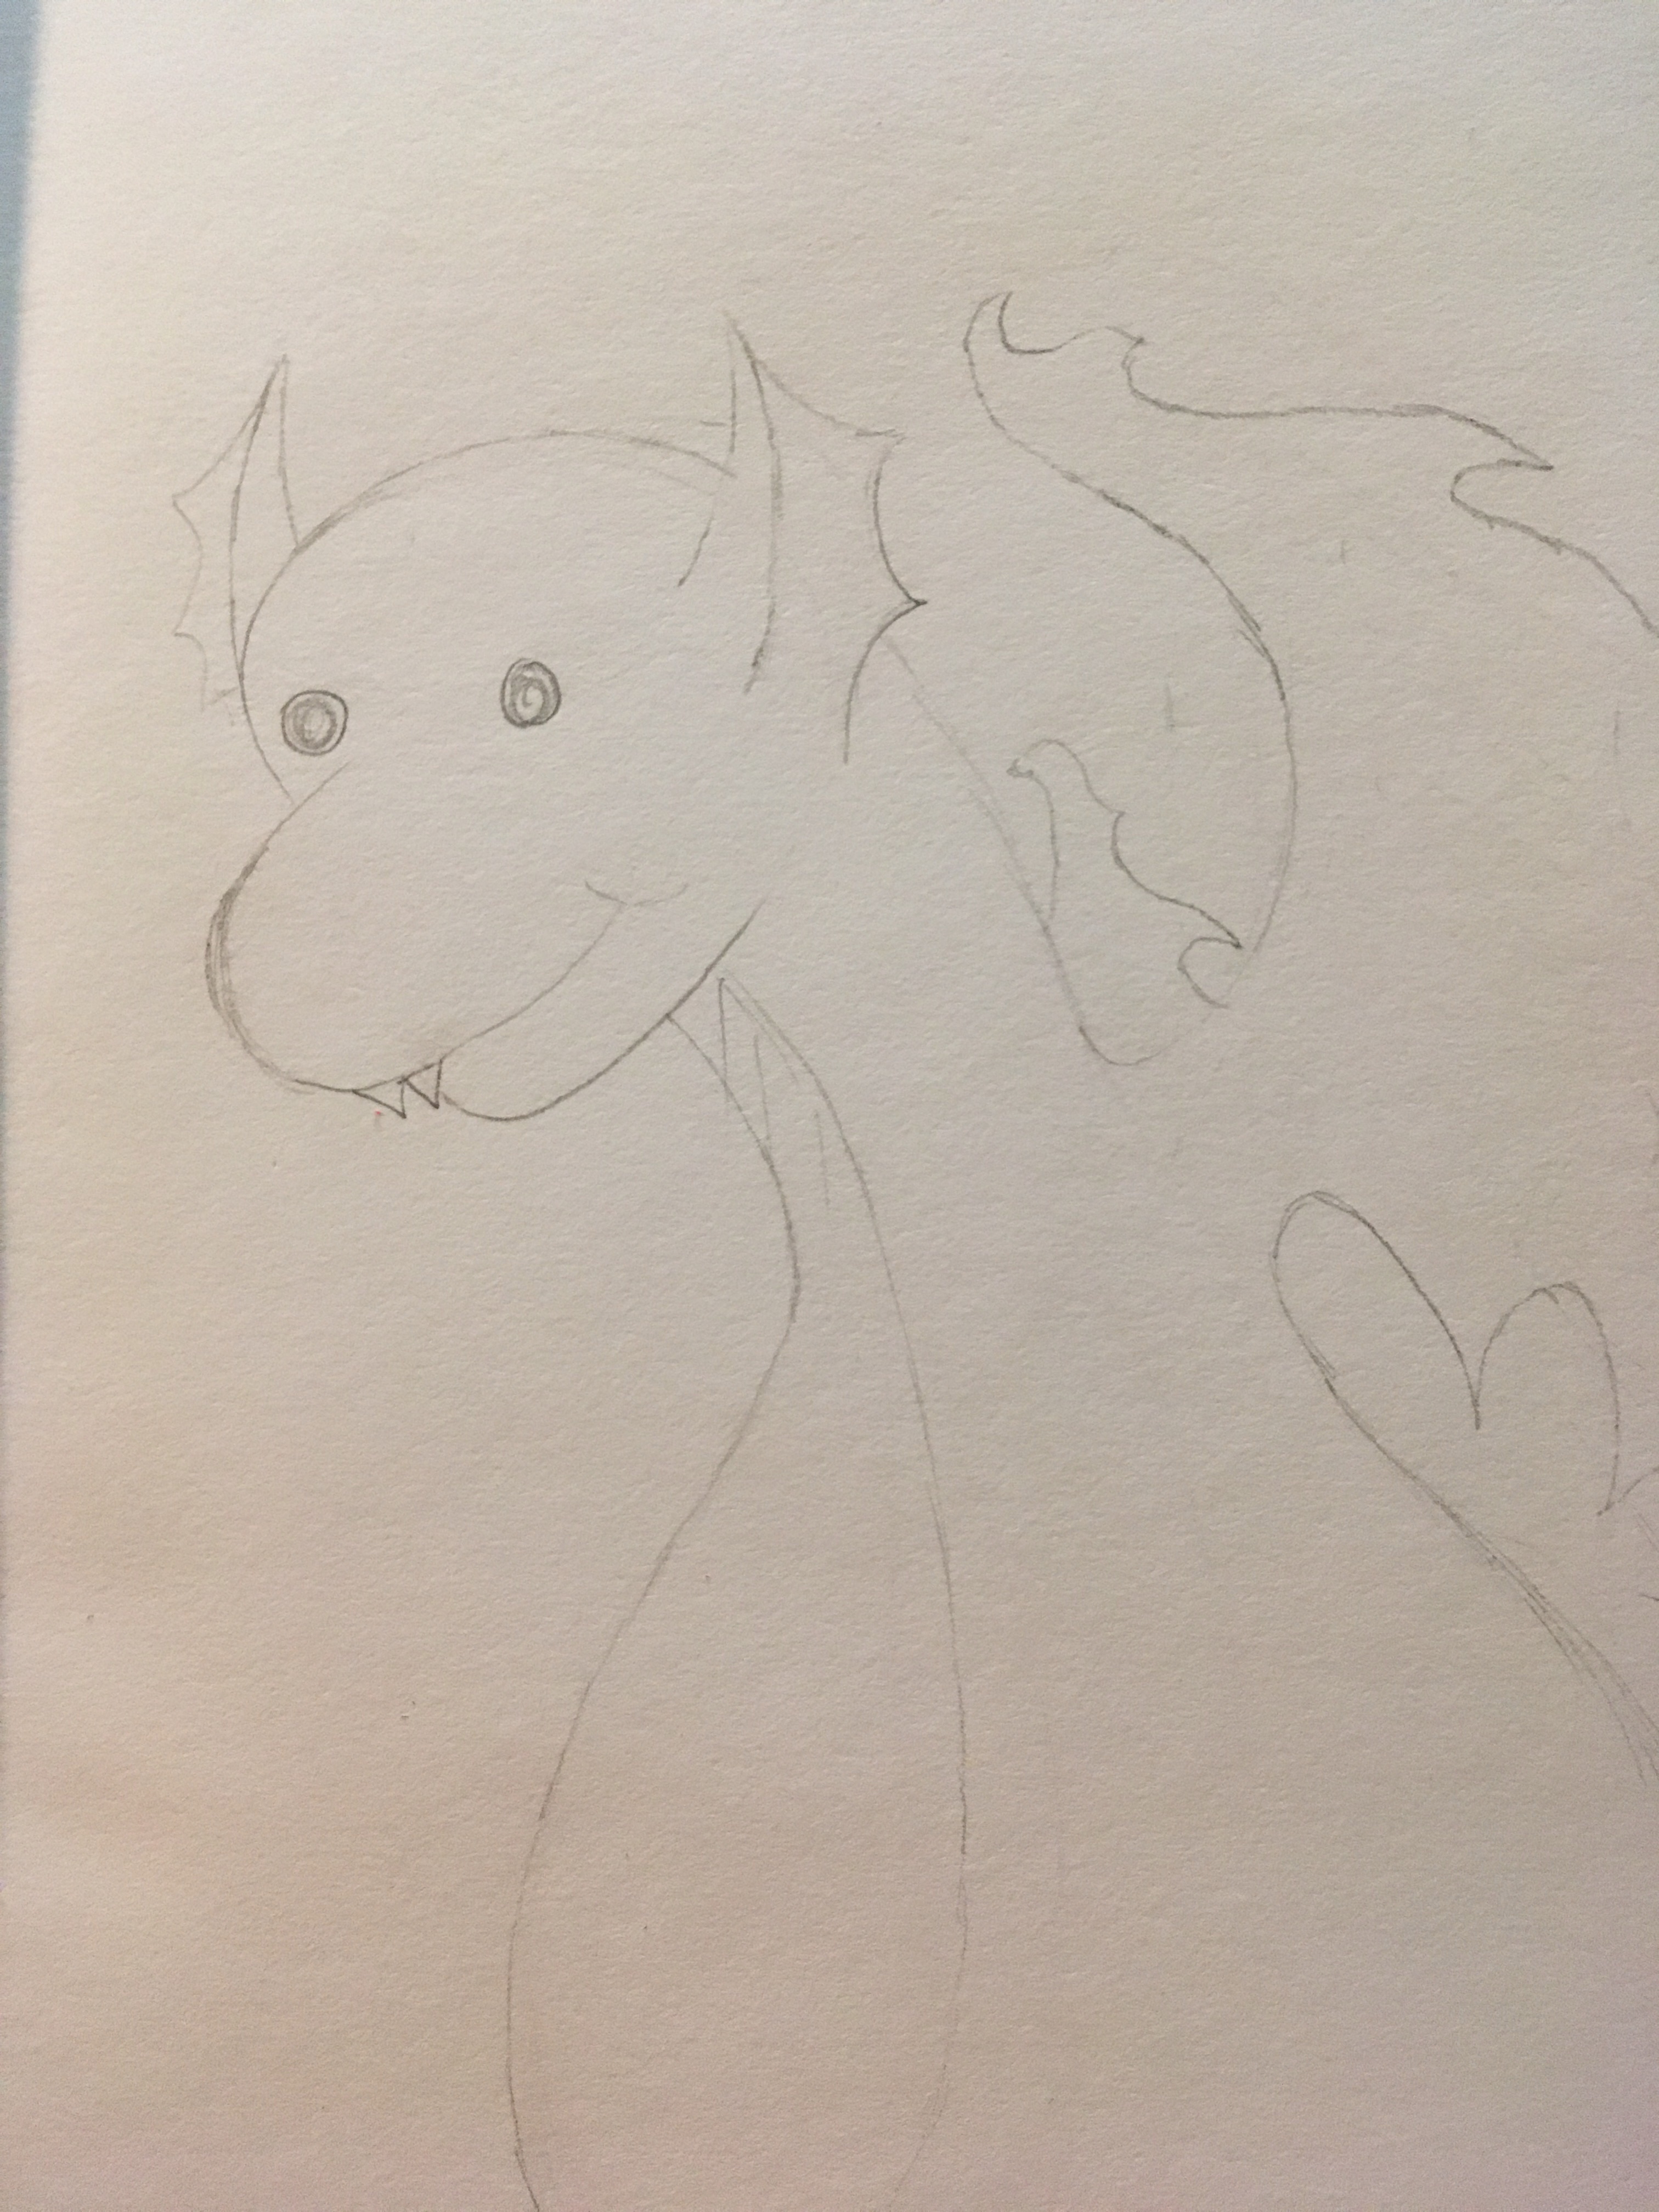 Dragon sketched in pencil with hypnotic eyes